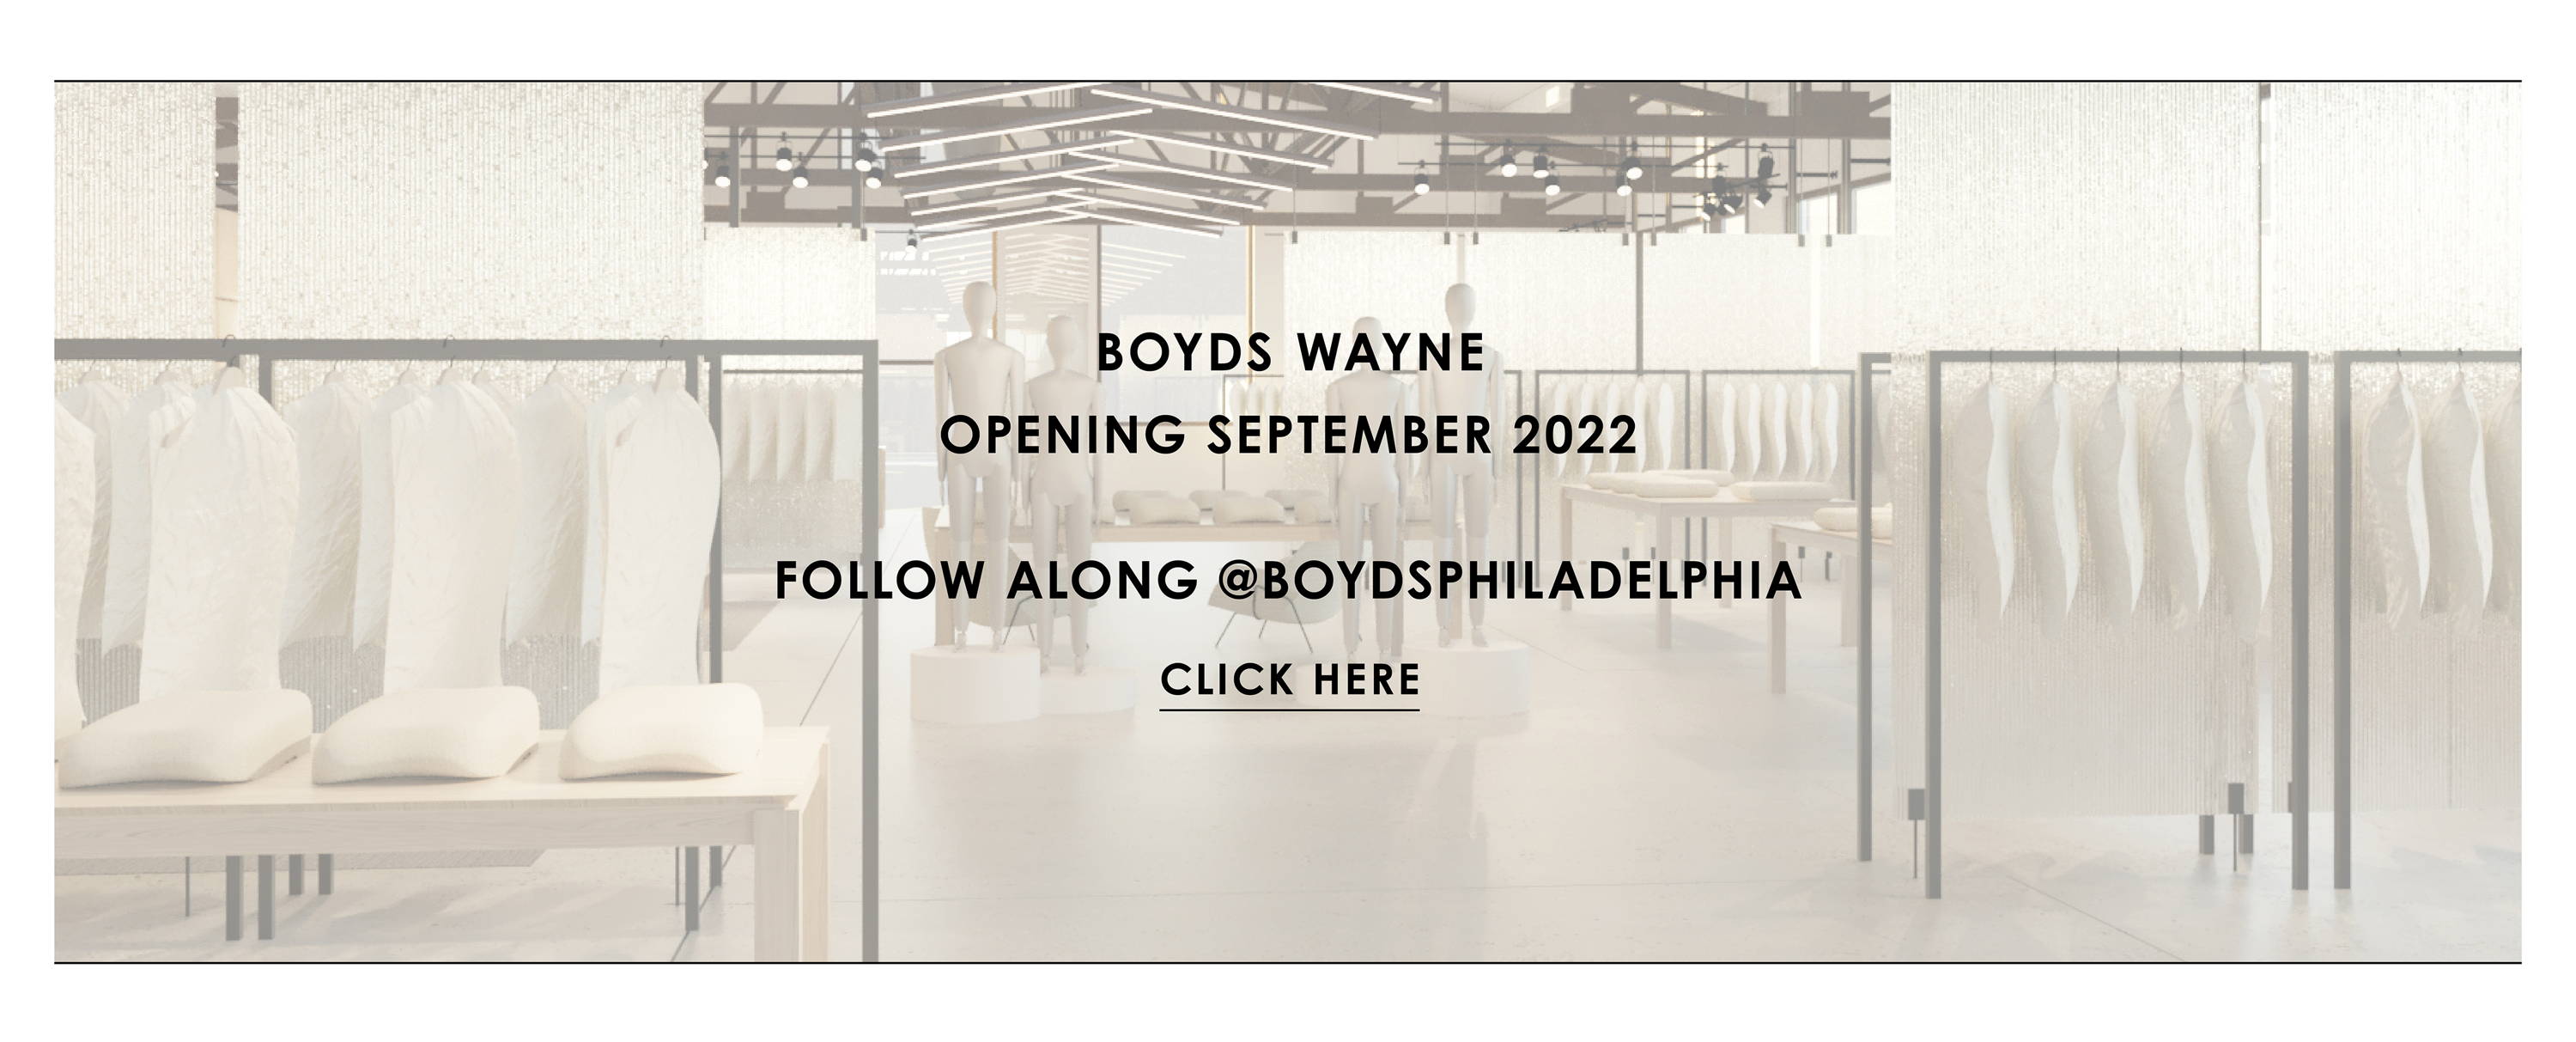 Boyds Wayne Opening September 2022